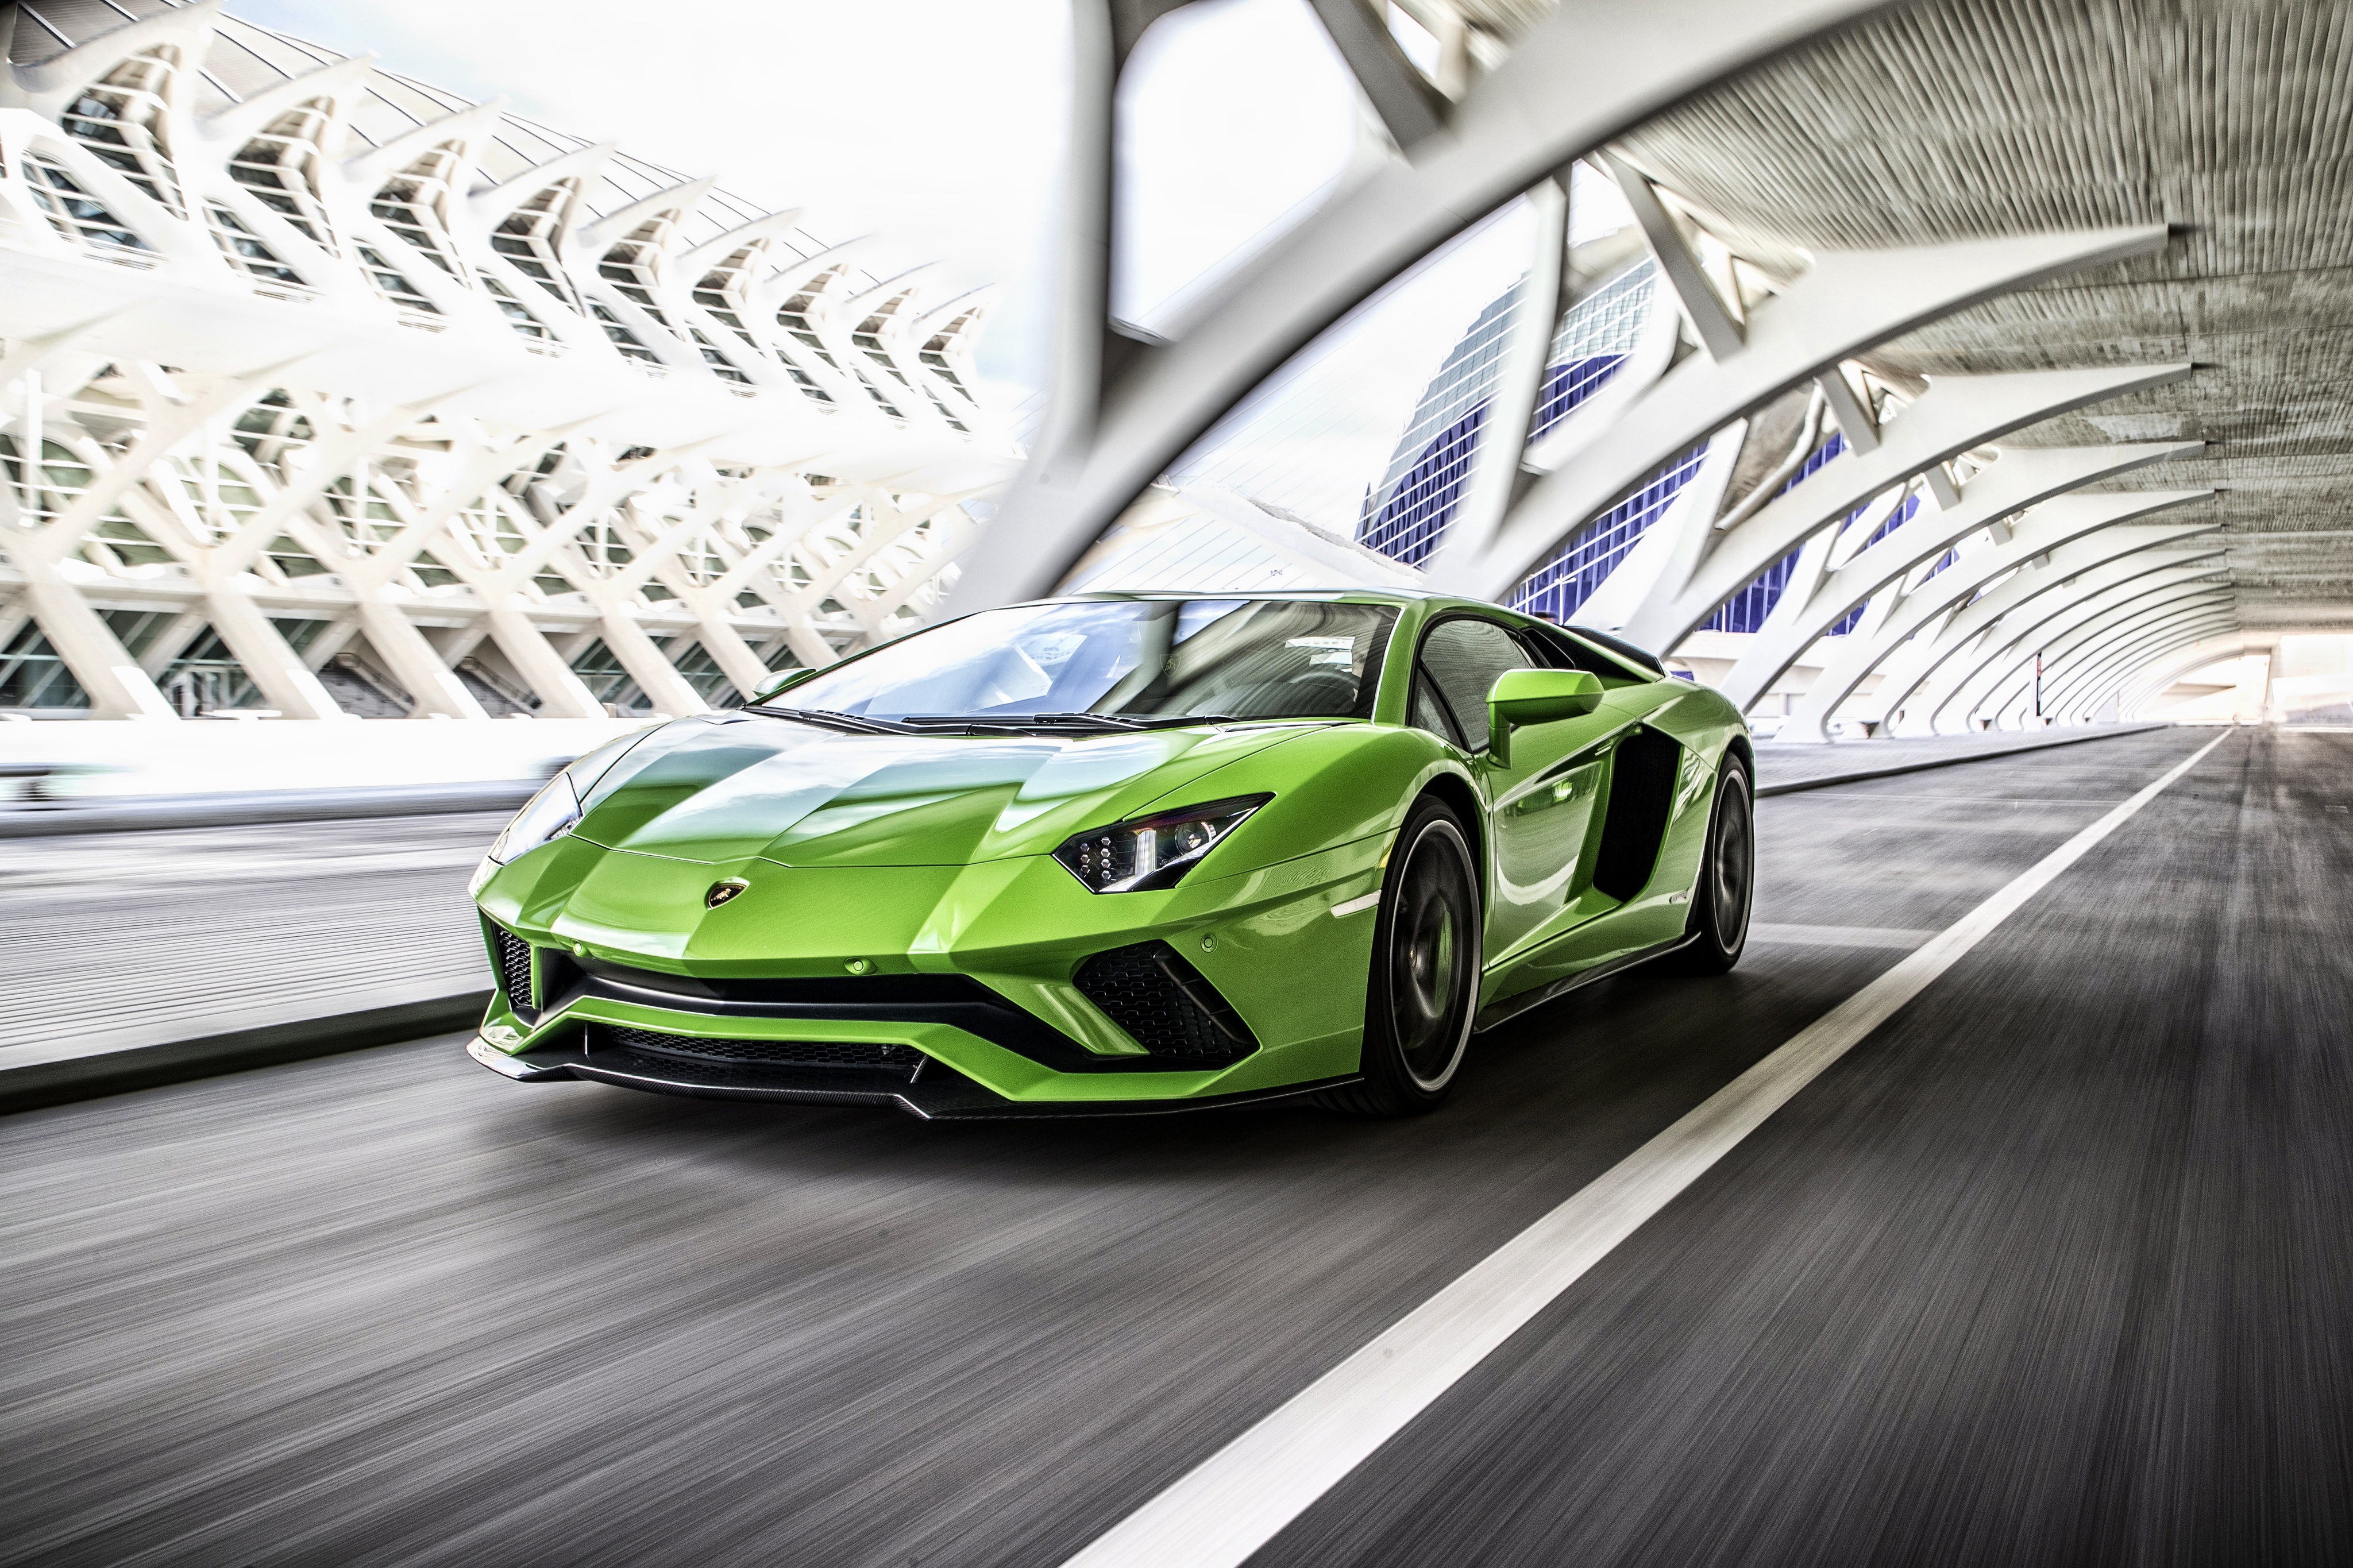 Télécharger des fonds d'écran Lamborghini Aventador S HD